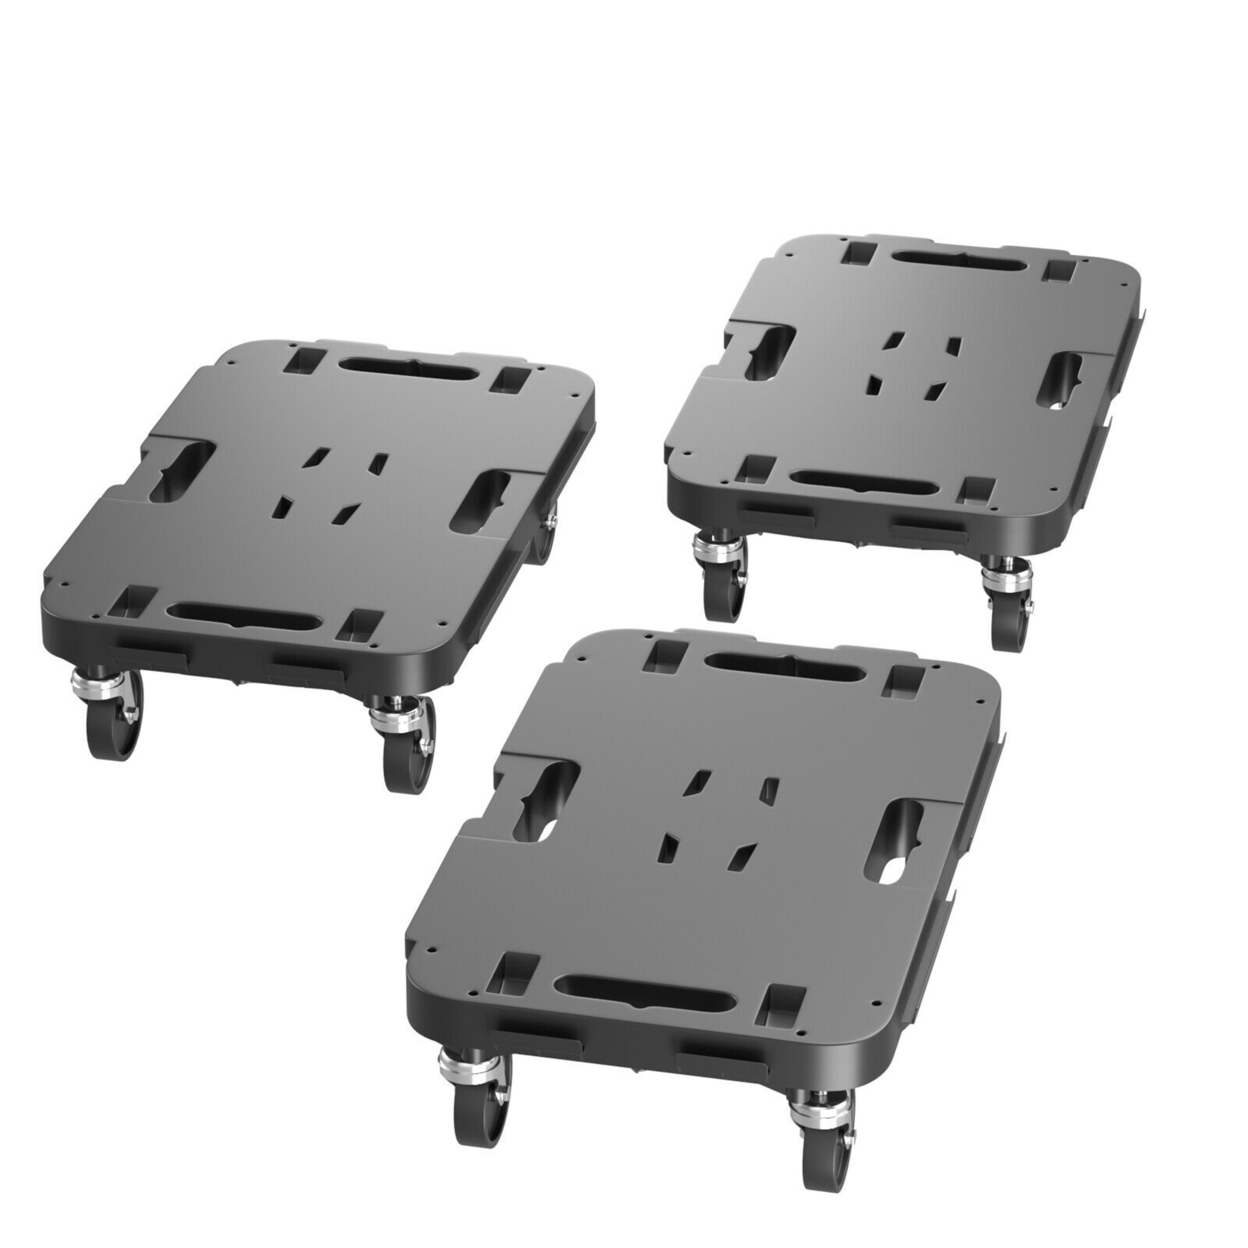 Platform Dolly Interlocking Furniture Mover 660lbs Weight Capacity - 3 Pcs